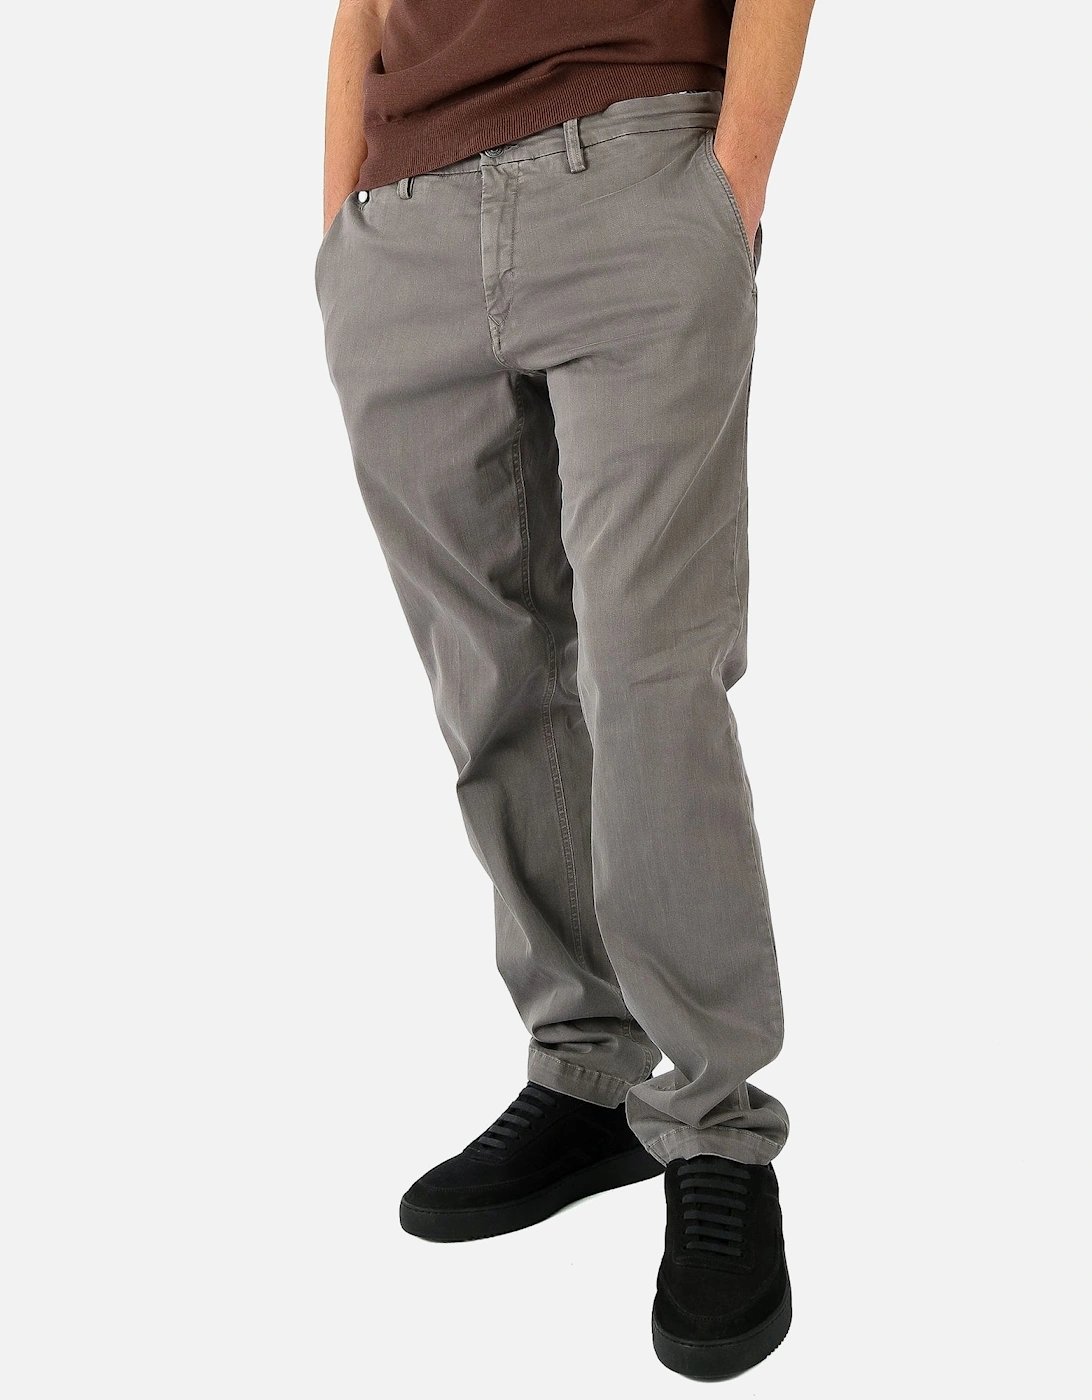 Benni Hyperflex Grey Chino Trouser